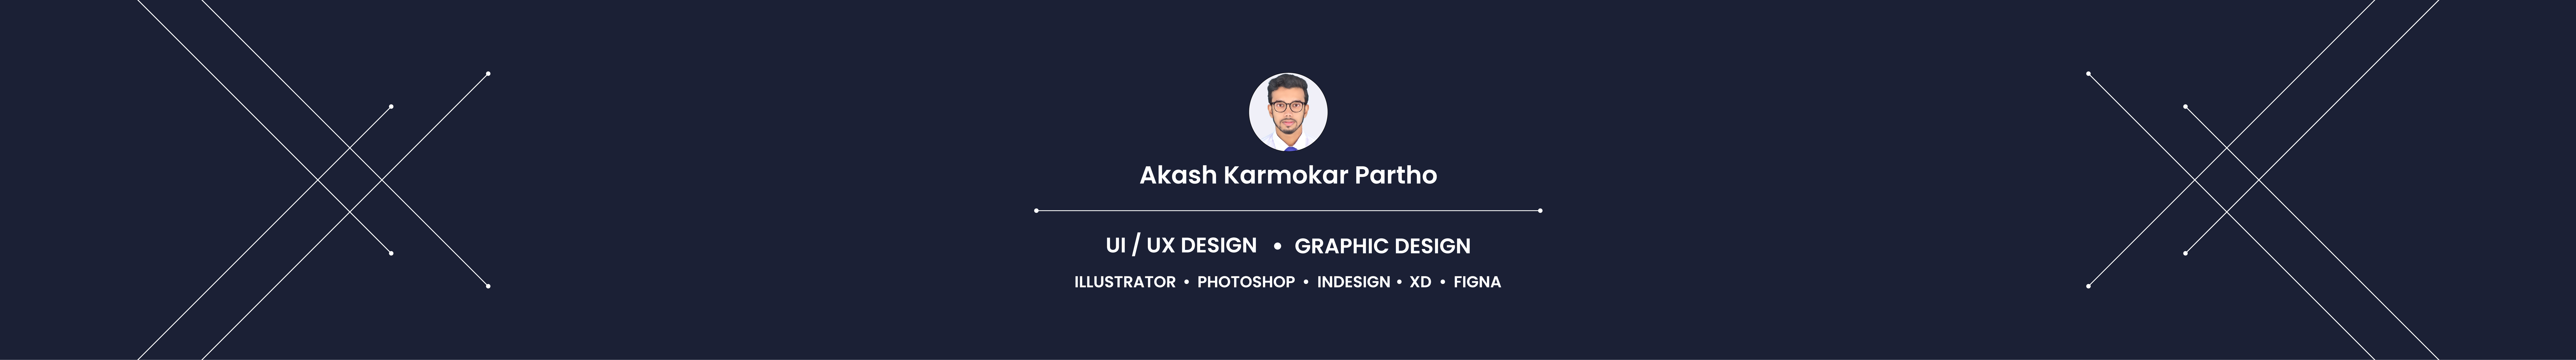 Banner de perfil de Akash Karmokar Partho